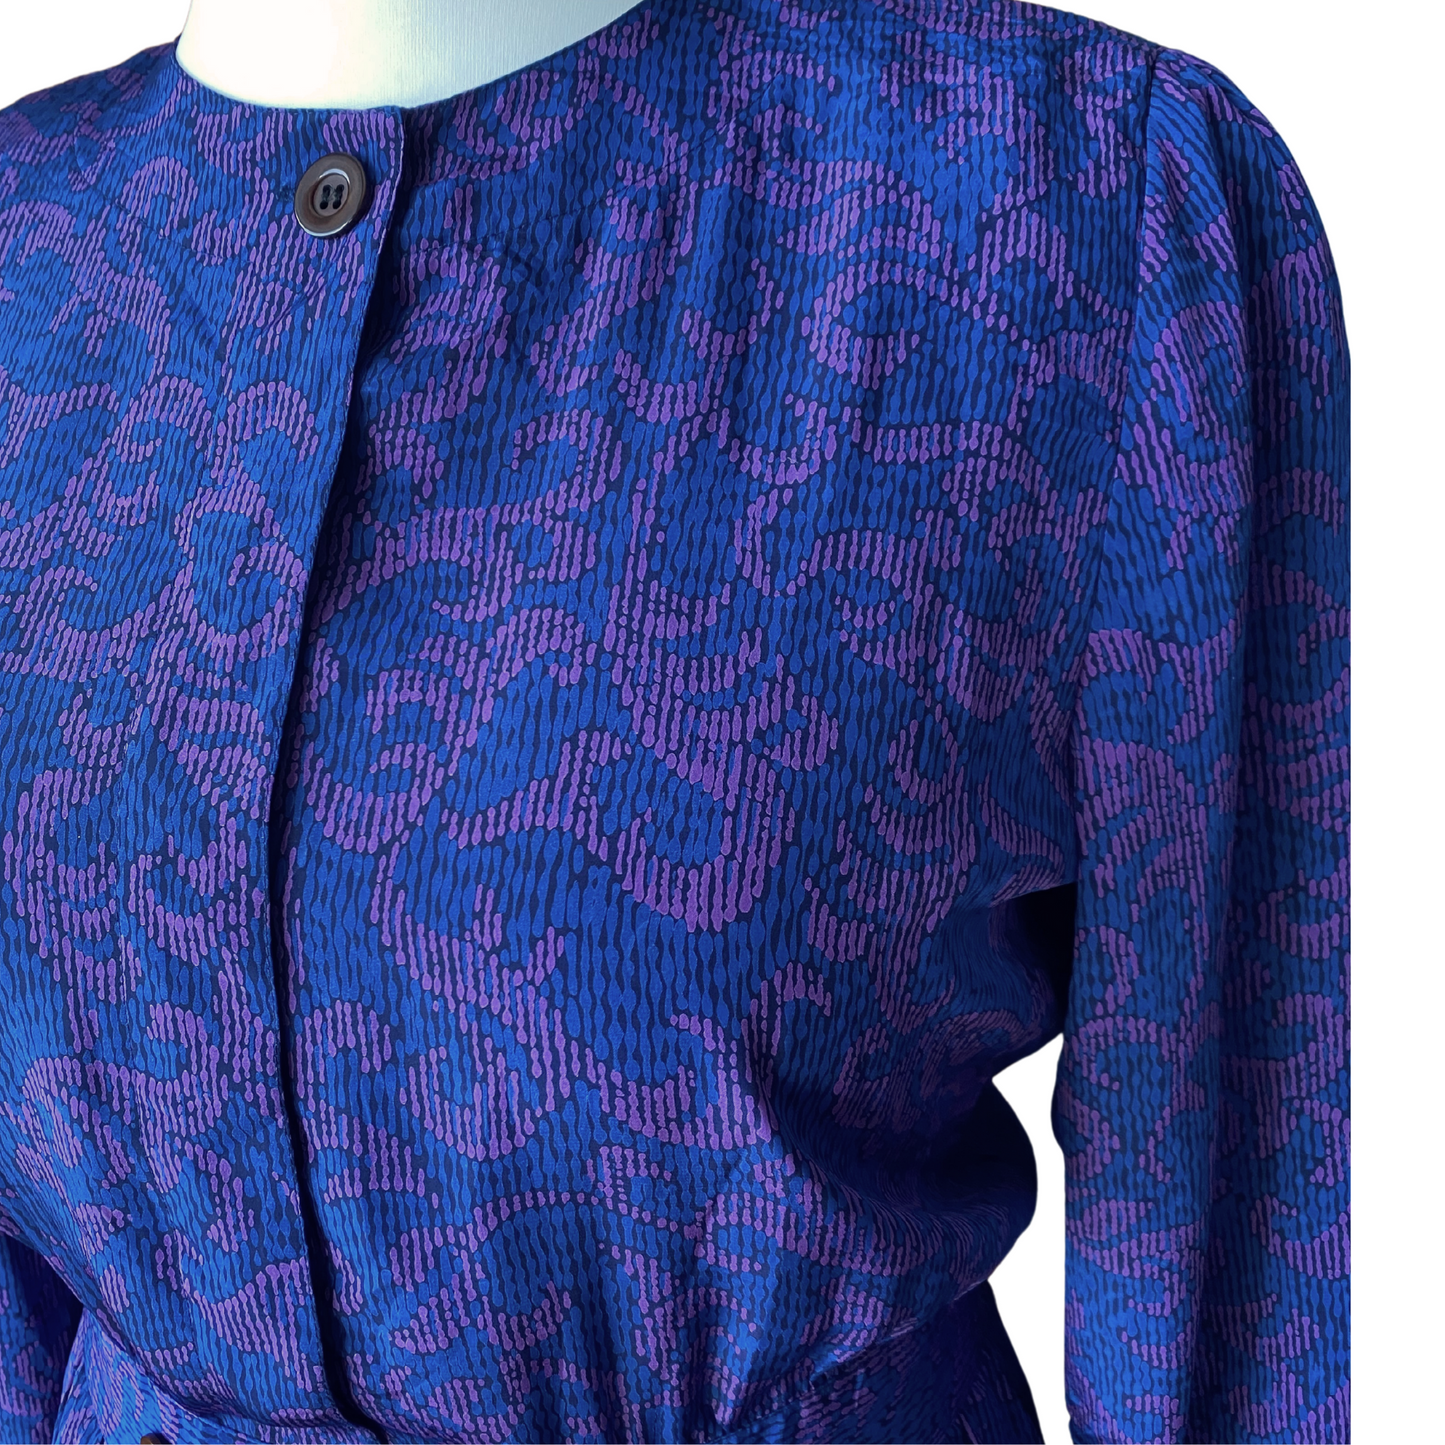 Vintage Liz Claiborne Blue and Purple Abstract Print 80s Midi Dress.Approx UK size 14